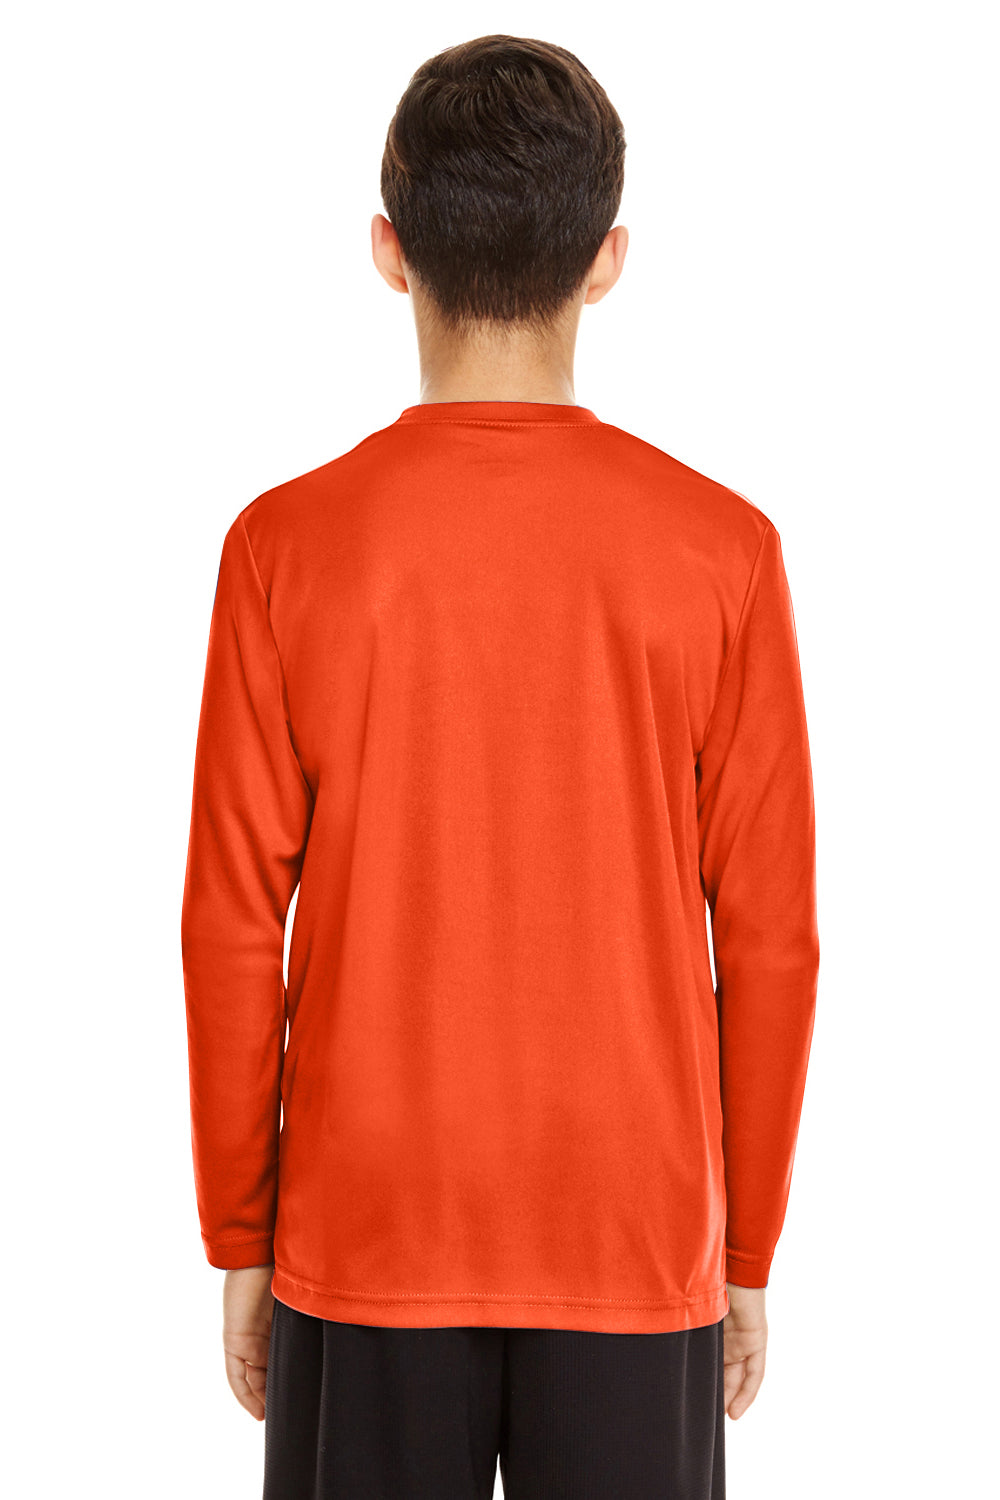 Team 365 TT11YL Zone Performance Moisture Wicking Long Sleeve Crewneck T-Shirt Orange Back